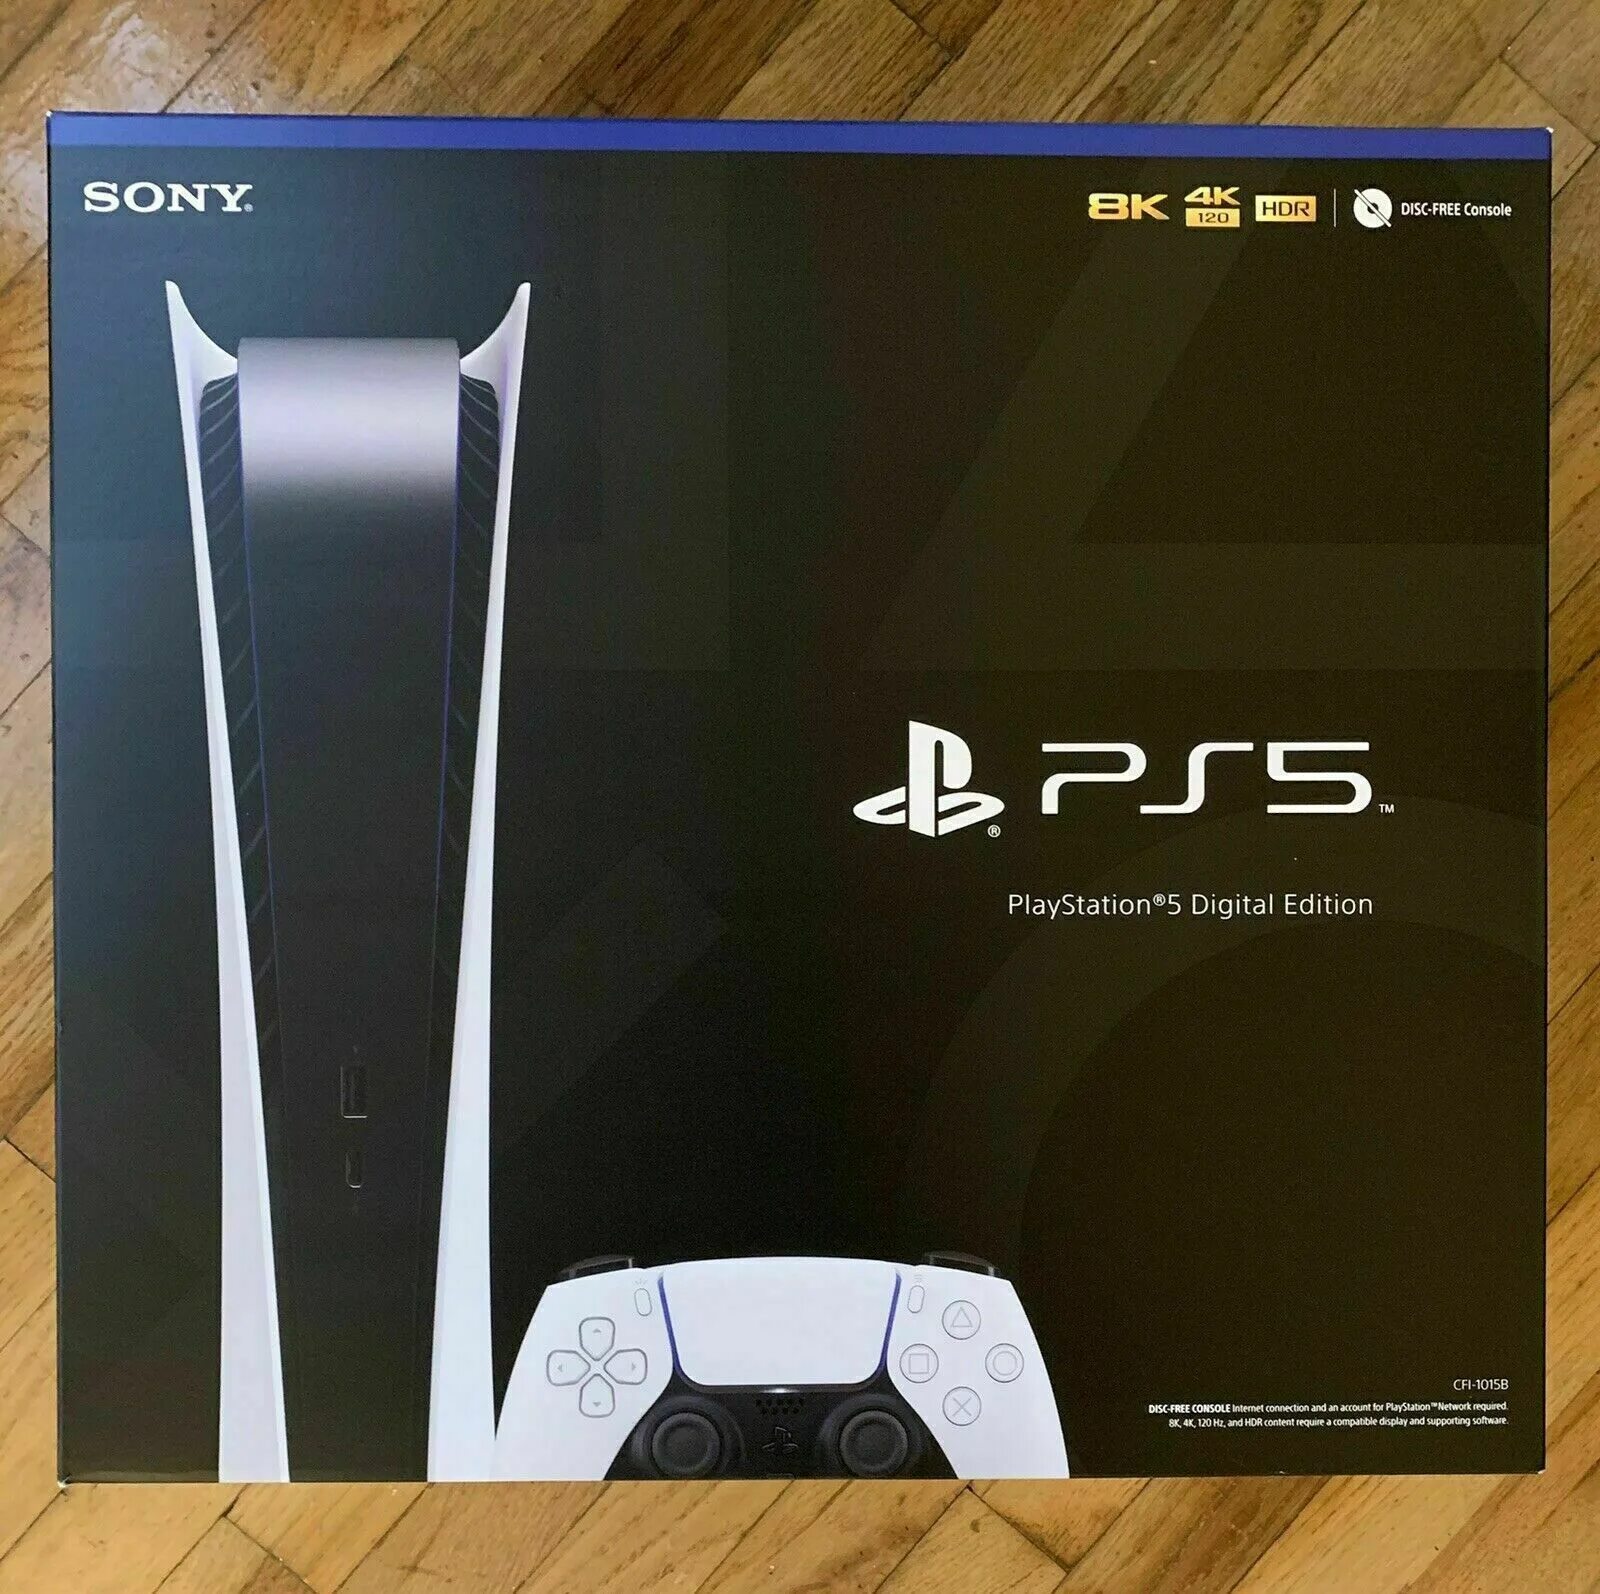 Sony playstation 5 digital edition отзывы. Ps5 Digital Edition. PLAYSTATION 5 Digital. Ps5 Digital Edition комплектация. Ps5 dics Drive for Digital Edition Consoles Slim.